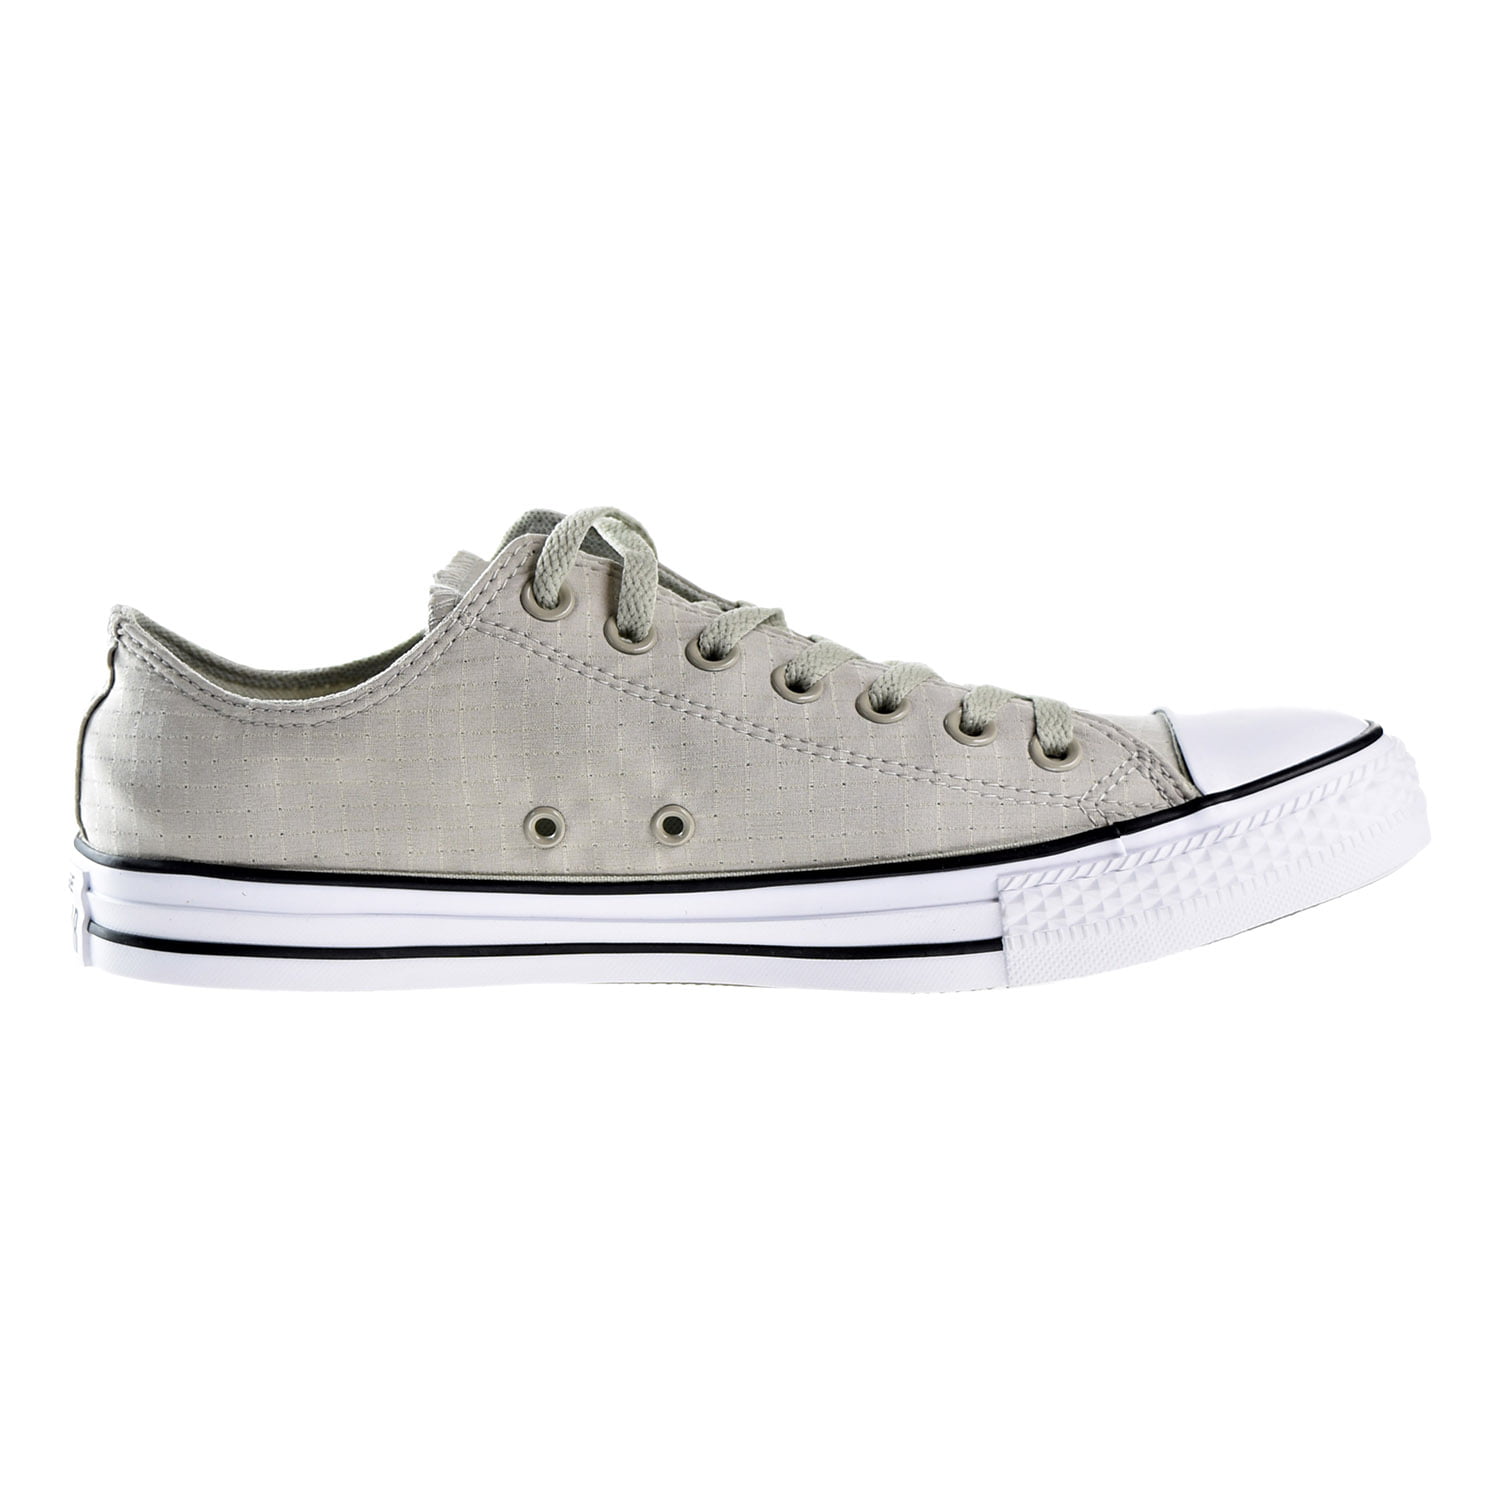 Converse Taylor All Star OX Unisex Shoes Light Surplus/White/Black155443f -